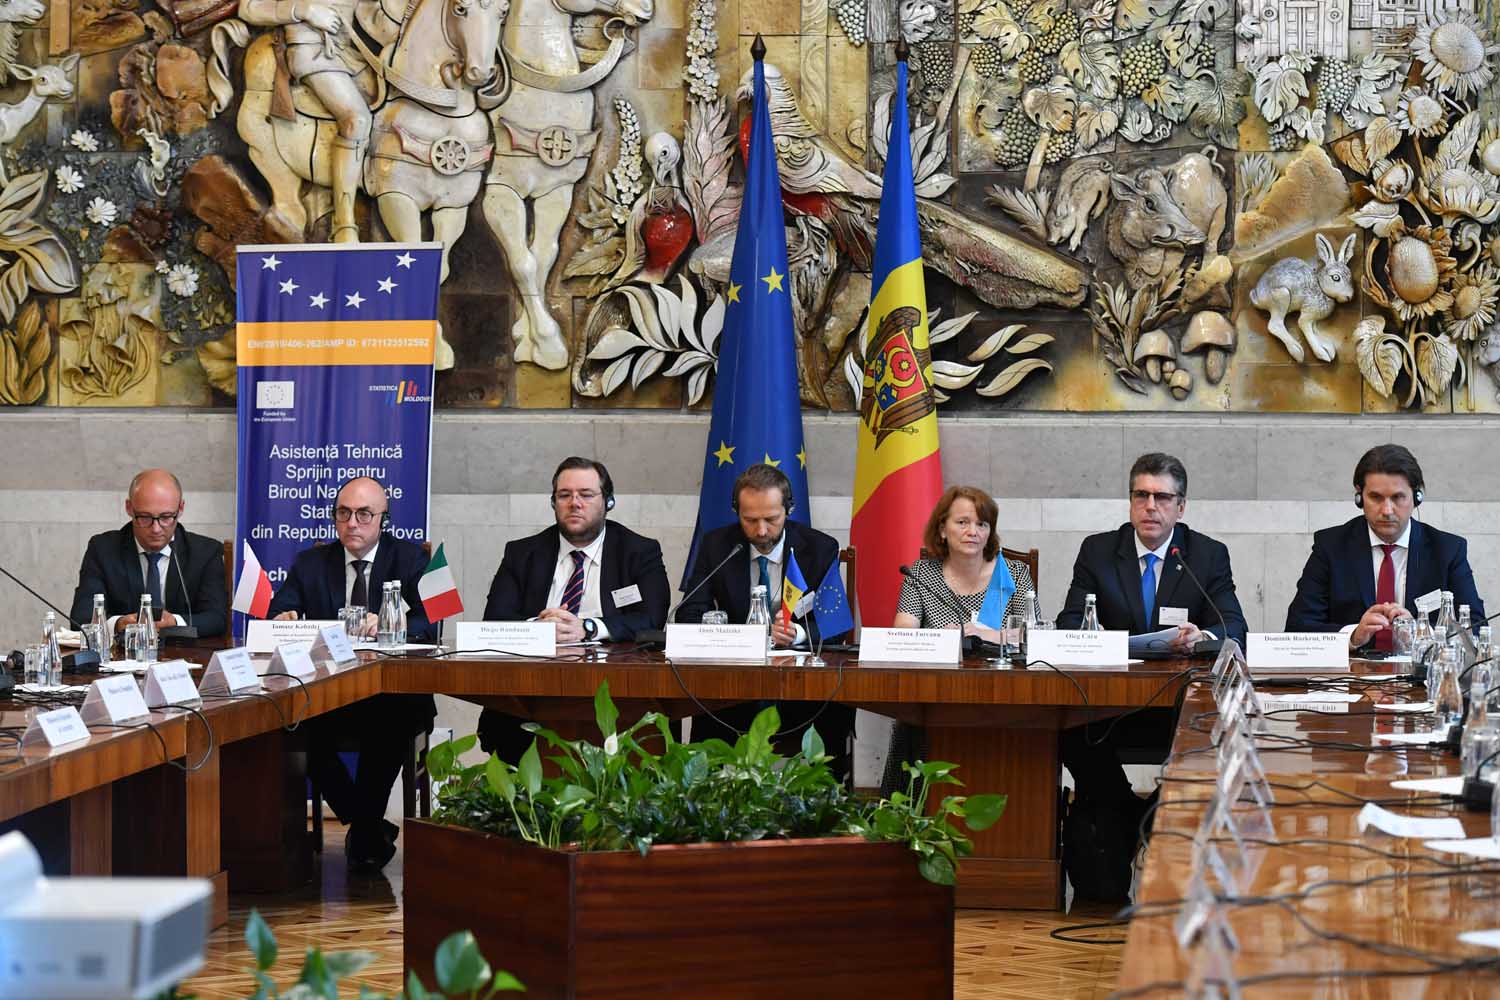 URS-SGI Evento conclusivo del Progetto ParStat – “Technical Assistance to Support National Bureau of Statistics of the Republic of Moldova”